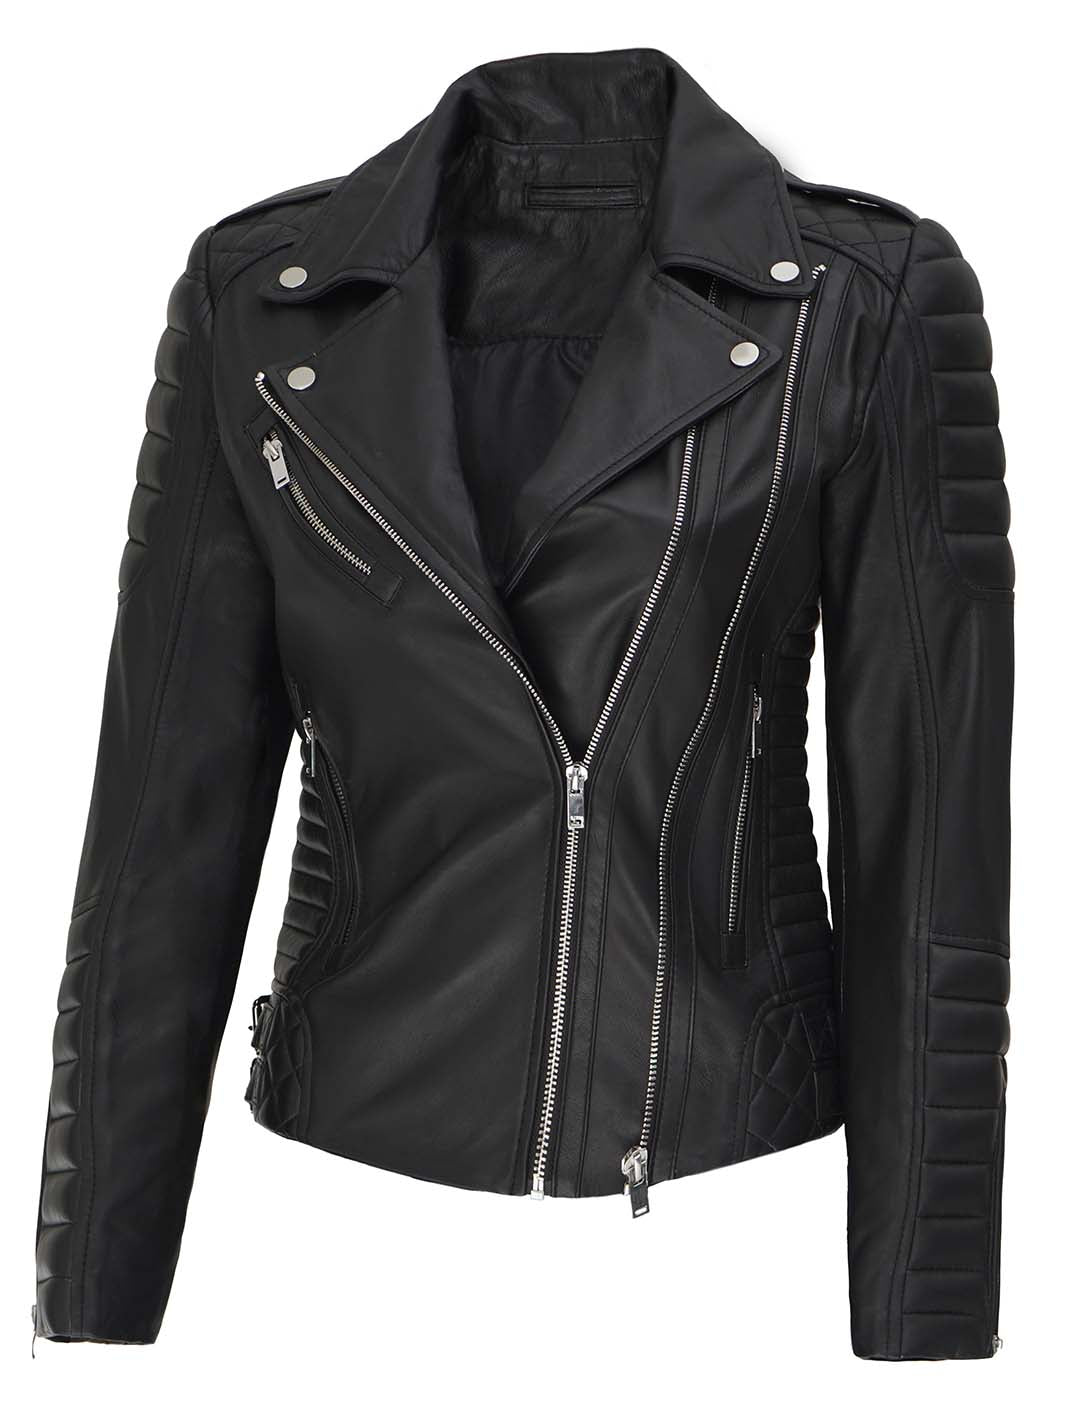 alt="Women quilted black moto leather jacket"